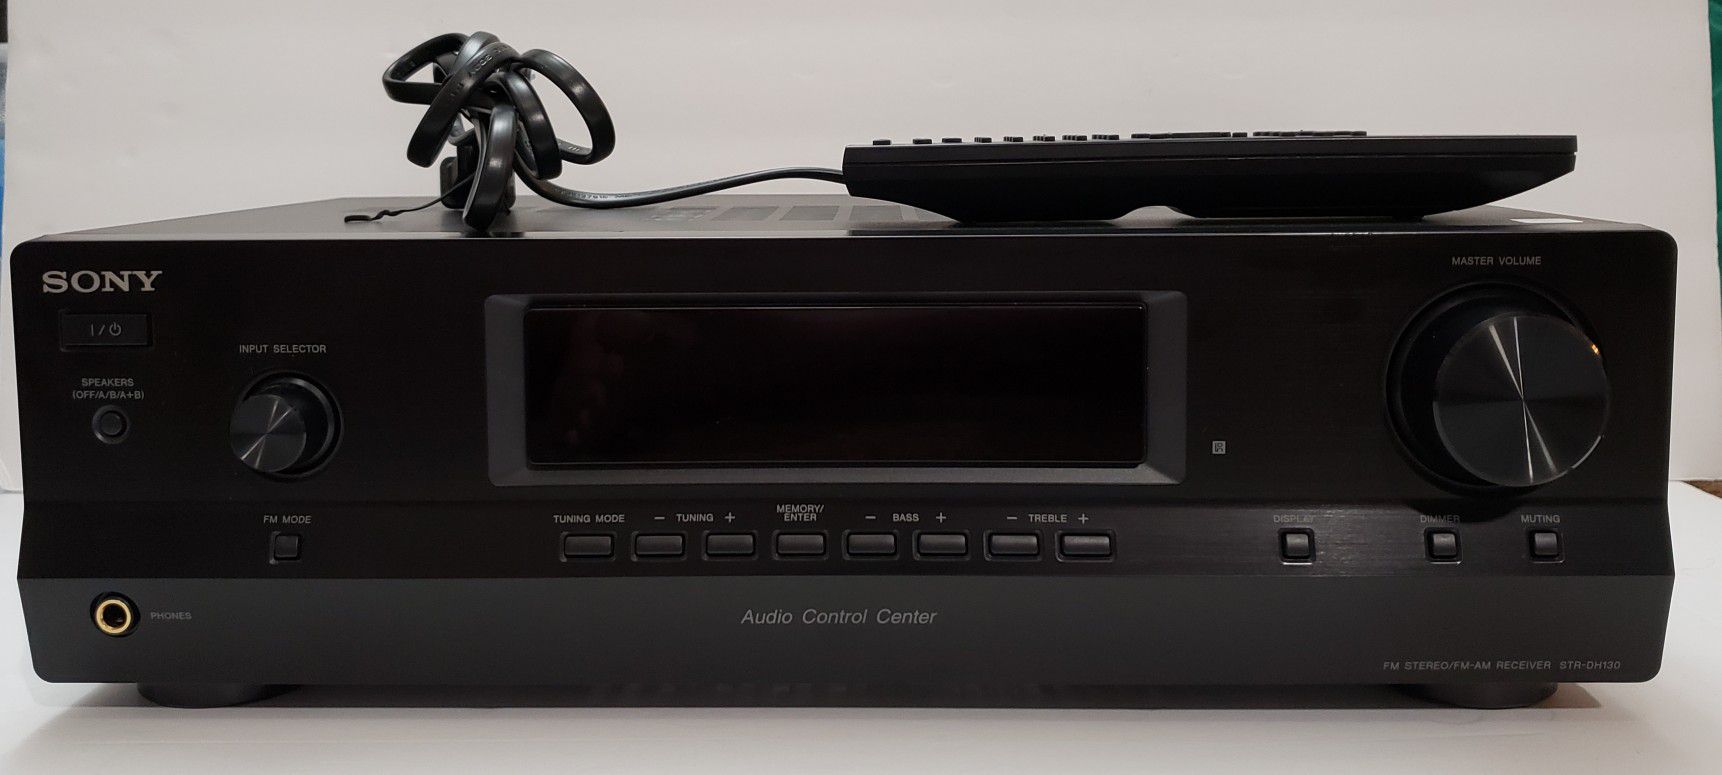 Sony STR-DH130 AM/FM stereo receiver 100 watts per channel